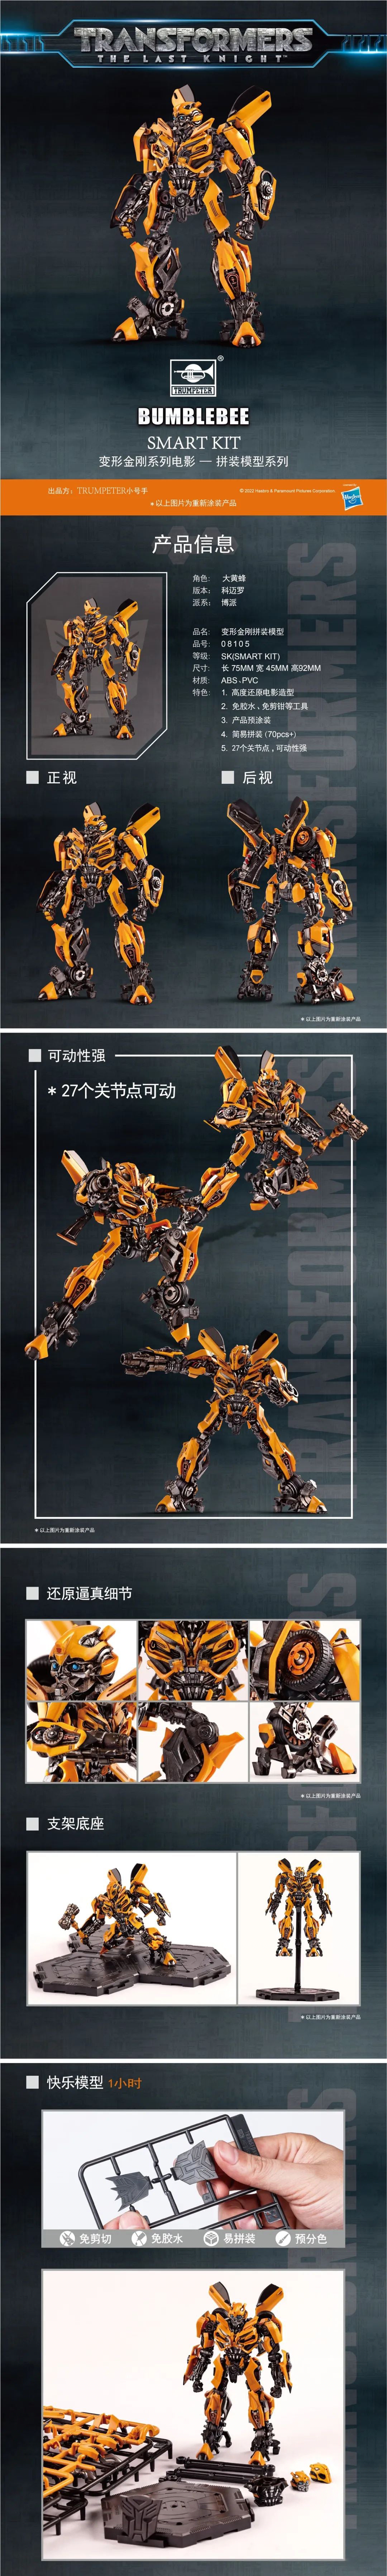 Transformers Bumblebee (The Last Knight Ver) Smart Model Kit